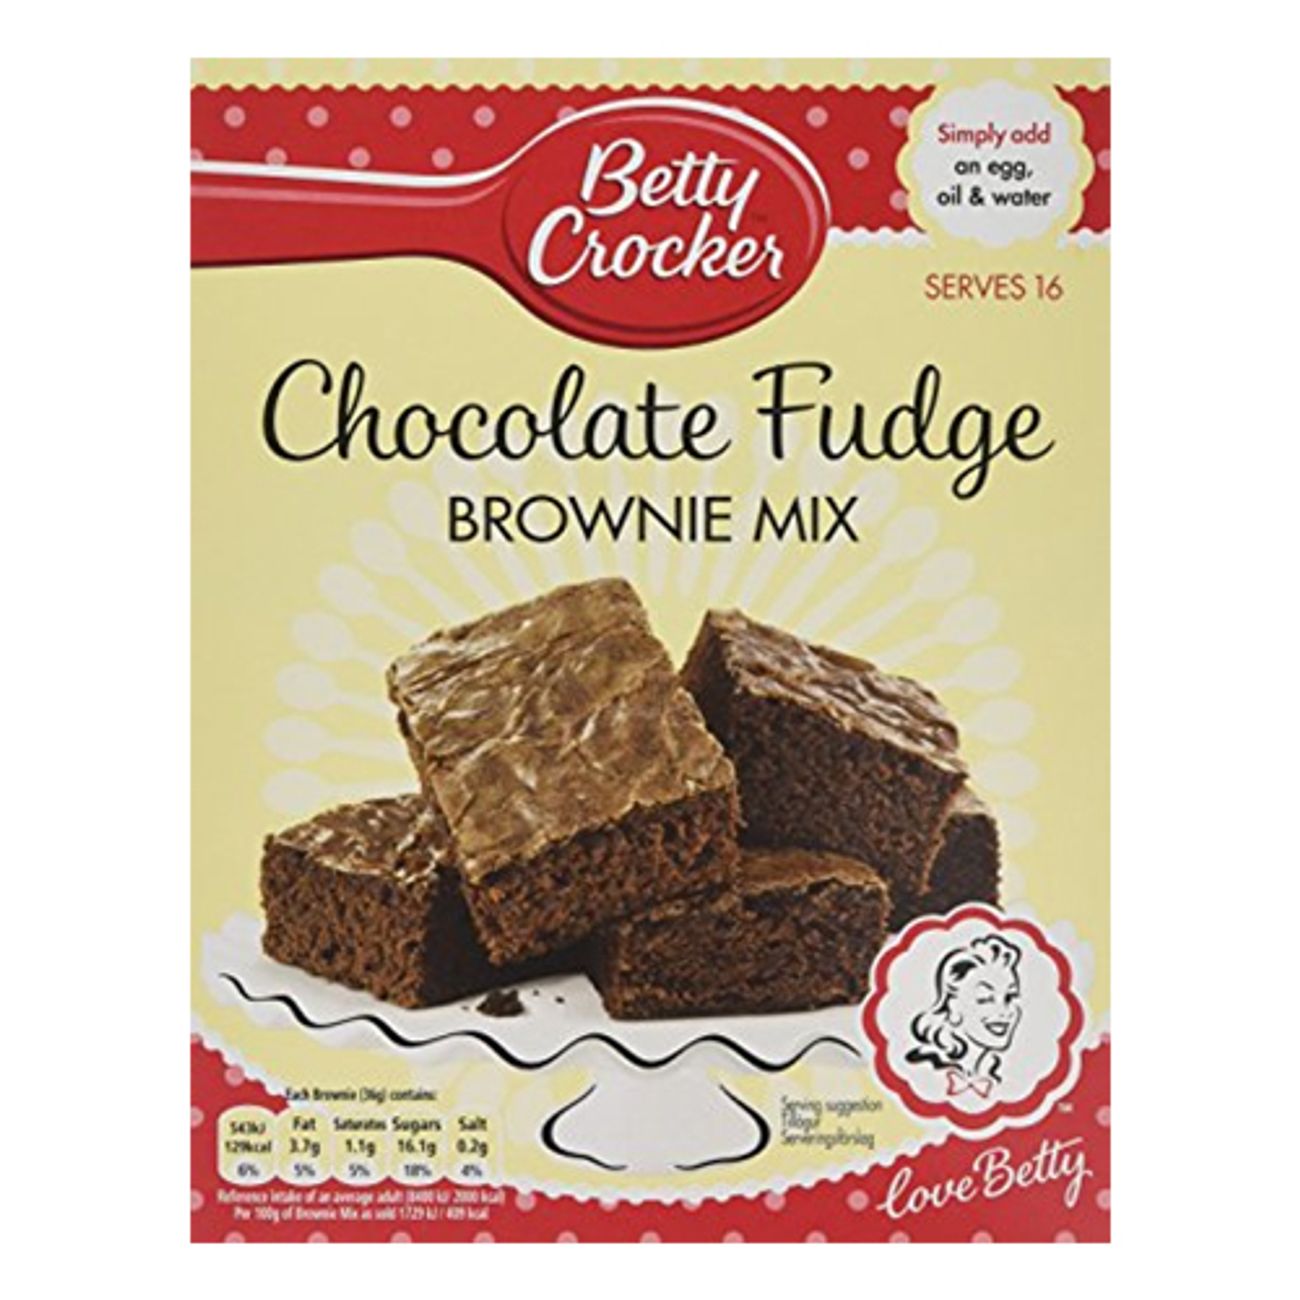 betty-crocker-chocolate-fudge-brownie-mix-1